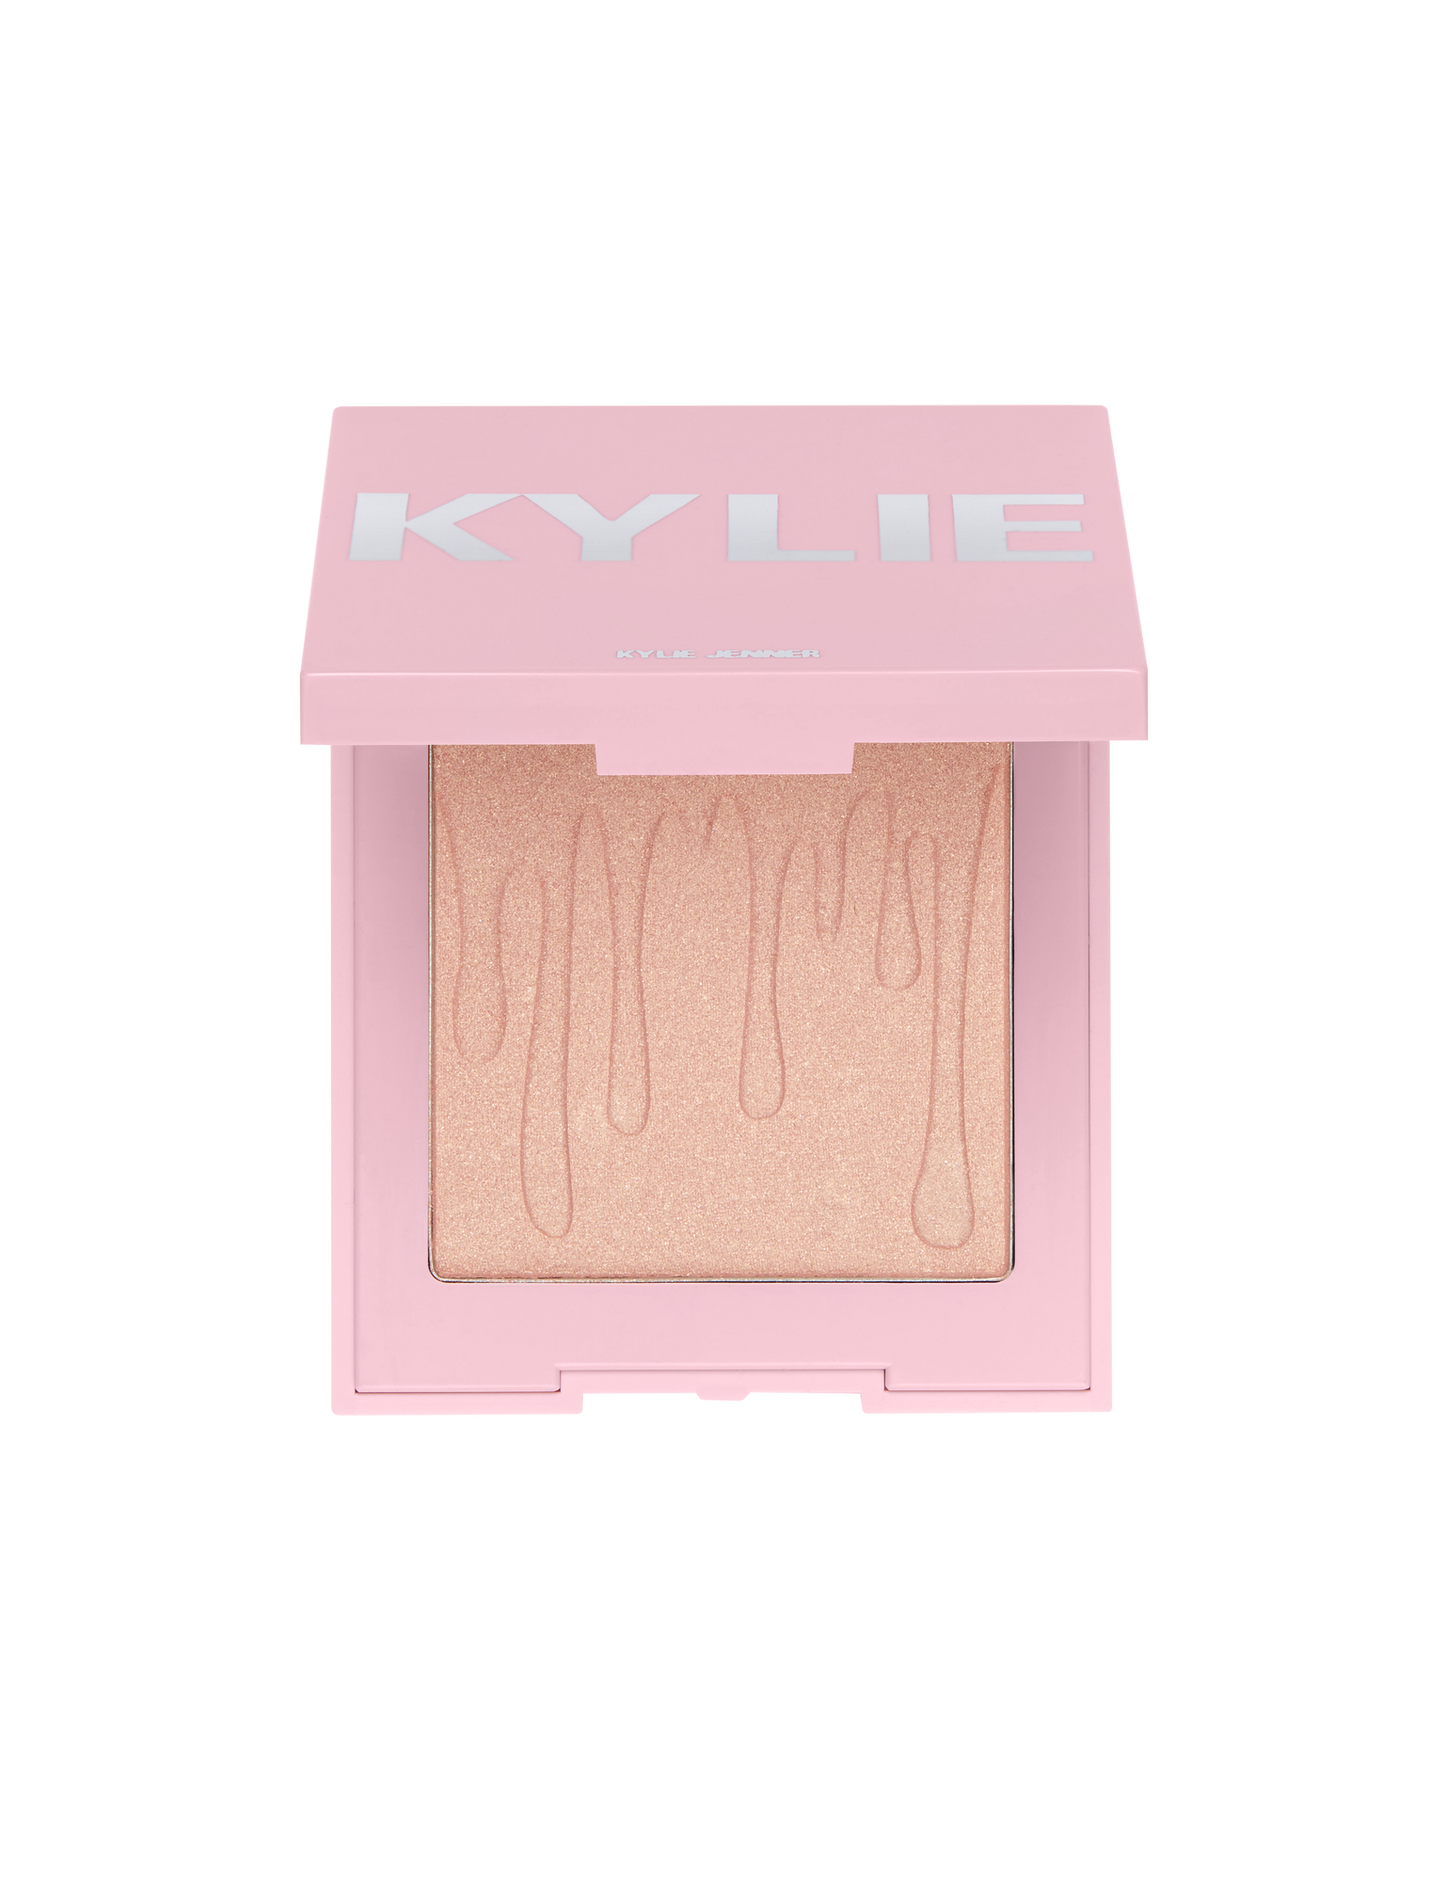 Queen Drip Kylighter Kylie Cosmetics